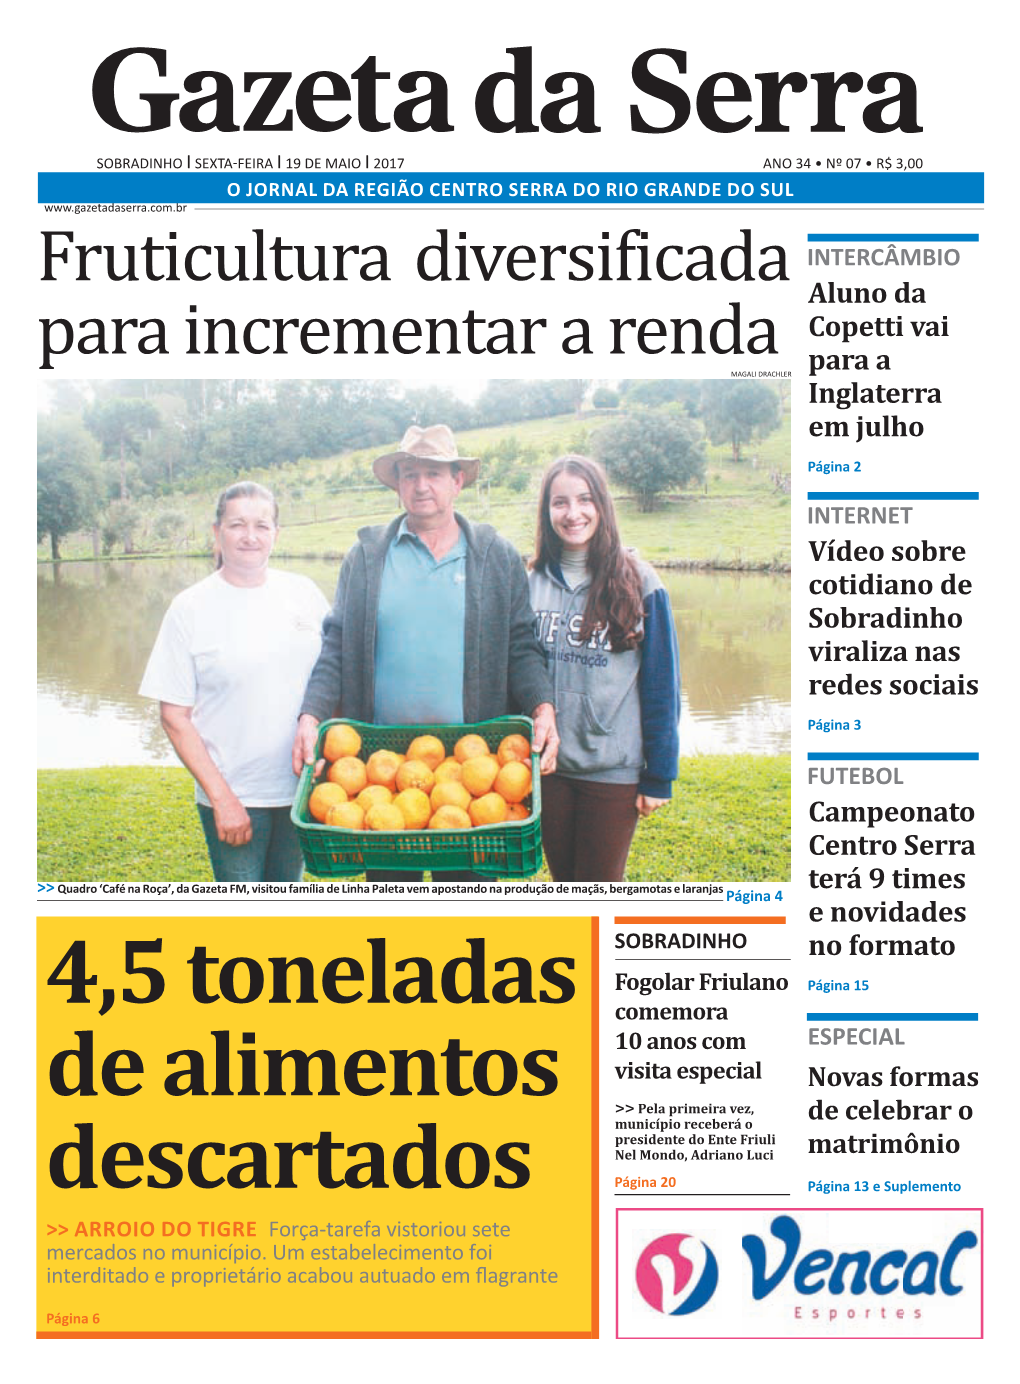 Fruticultura Diversificada Para Incrementar a Renda INTERCÂMBIO